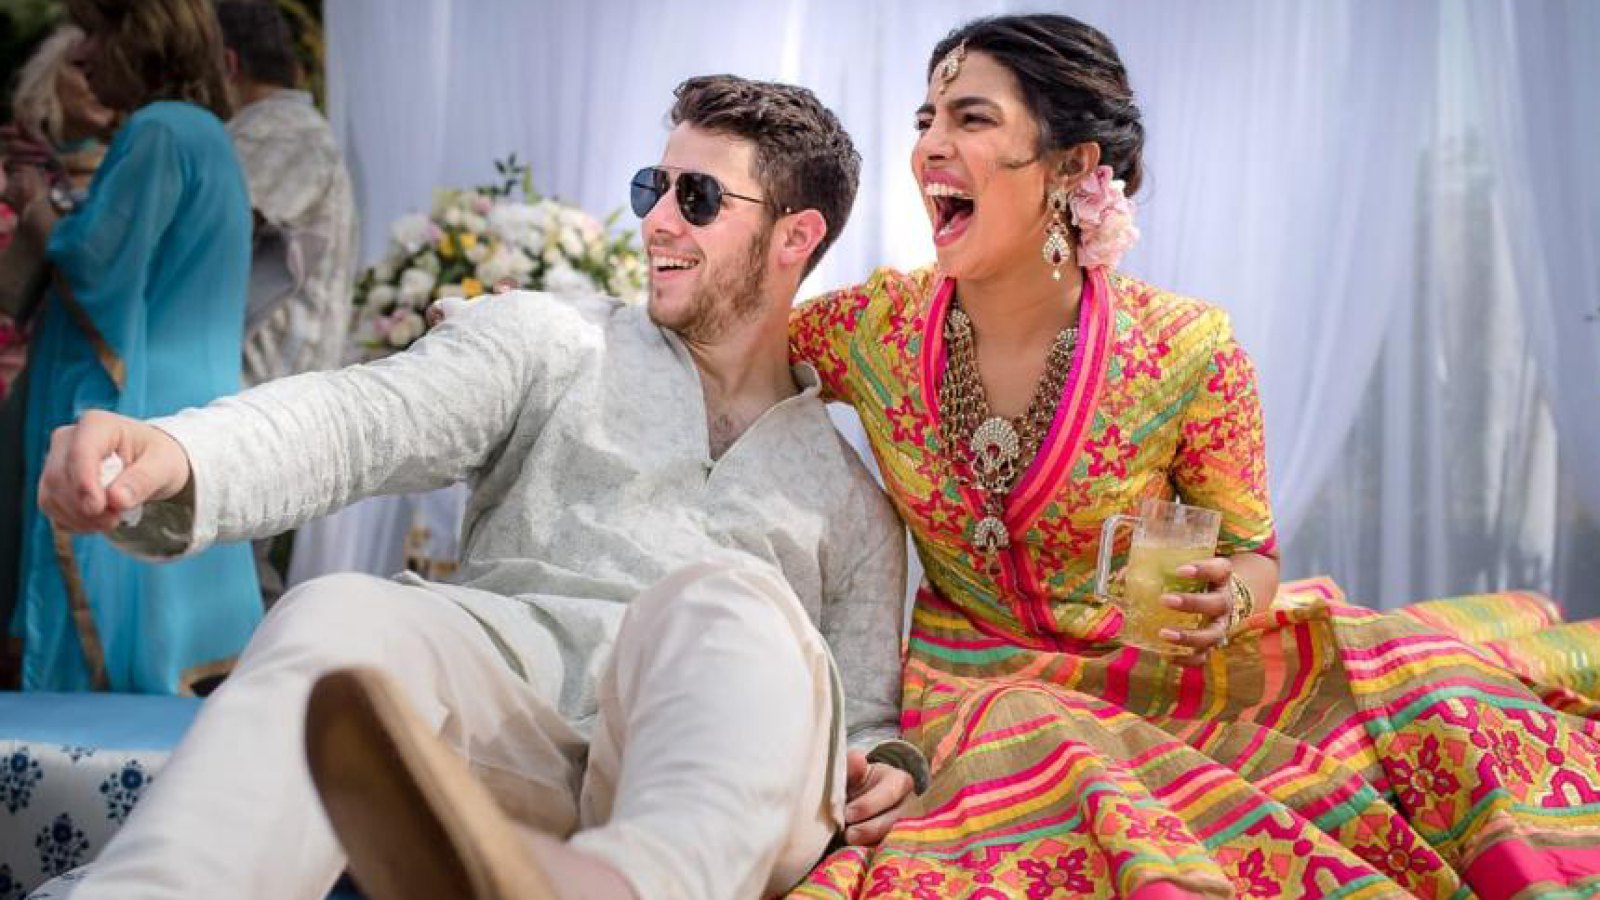 Inside Nick and Priyanka’s Wedding Ceremony: Exclusive Details